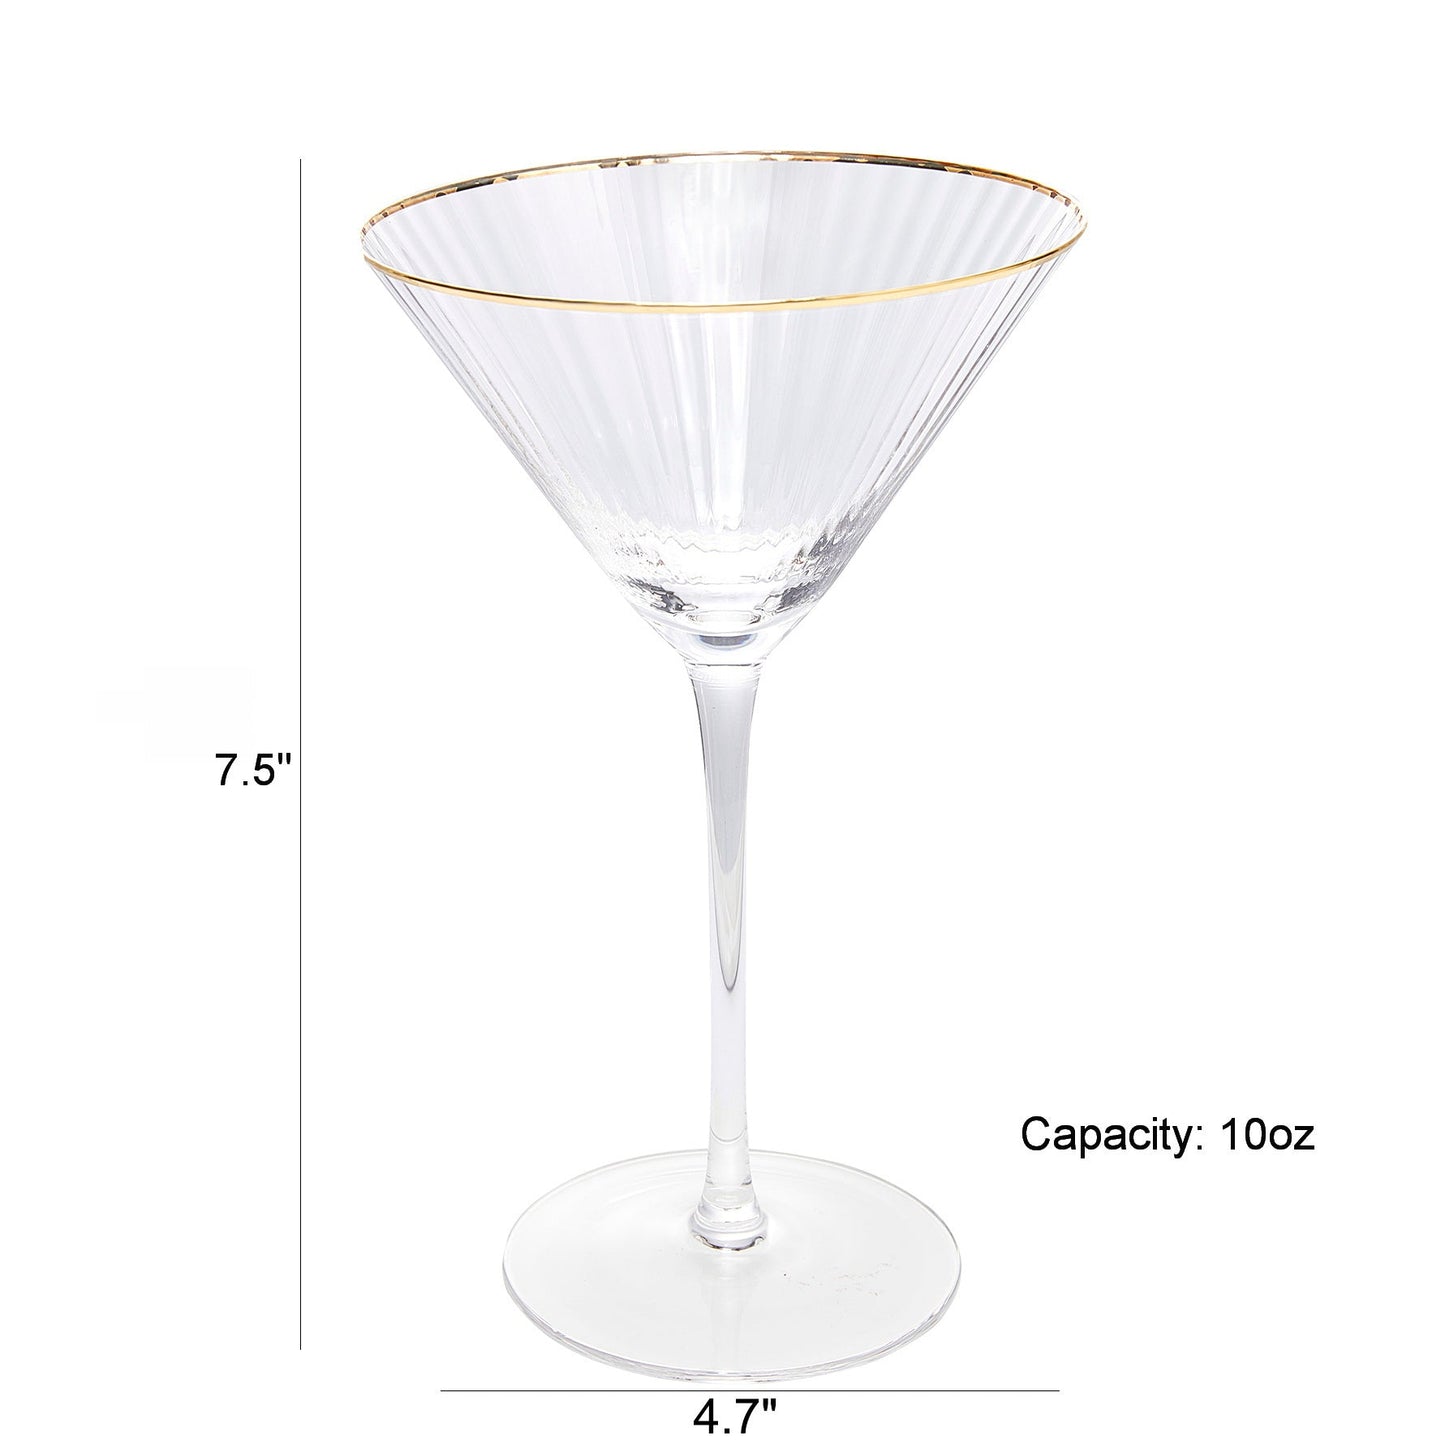 The Wine Savant - Gold Rim Vintage Martini Glasses - Set of 4 - 10oz